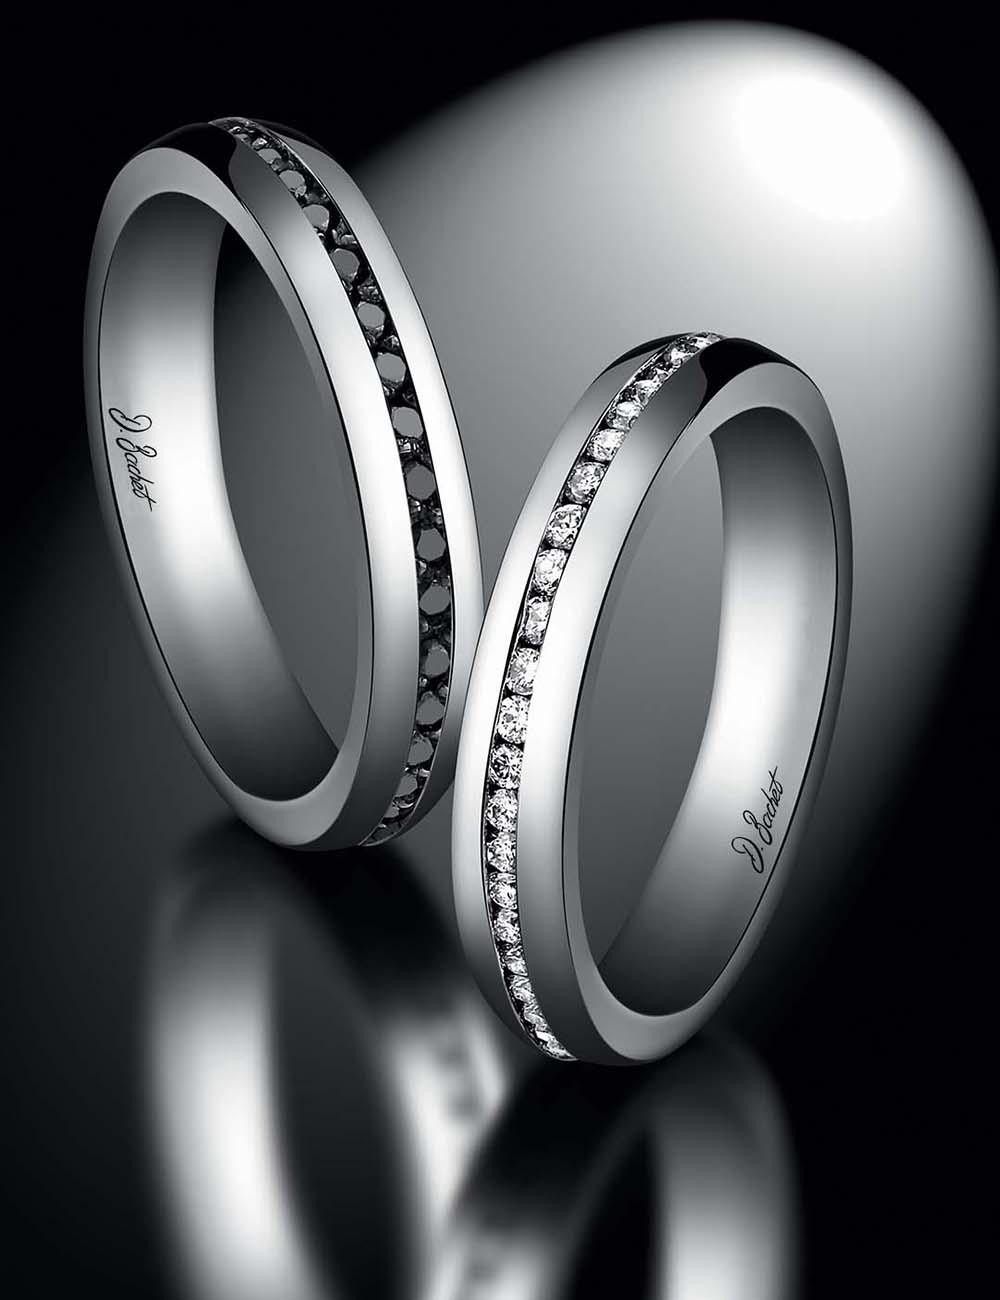 Men's platinum wedding band adorned with black diamonds, blending refinement and modern design to symbolize unique love.